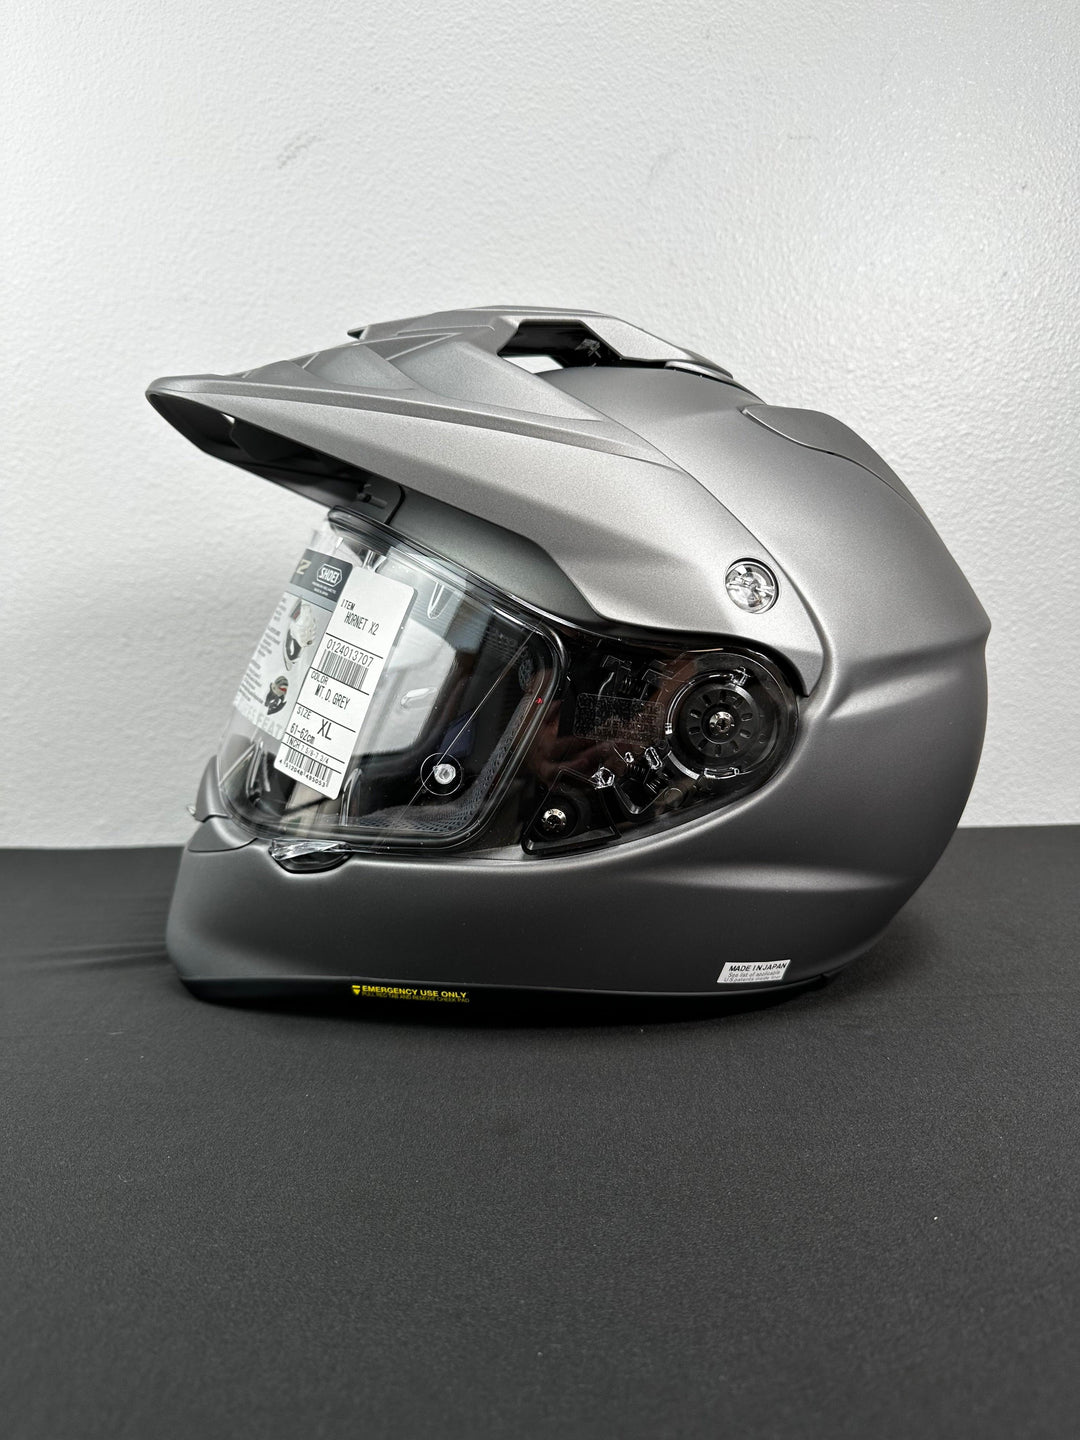 Shoei Hornet X2 Adventure Helmet - Matte Deep Gray - Size XL - OPEN BOX - Motor Psycho Sport